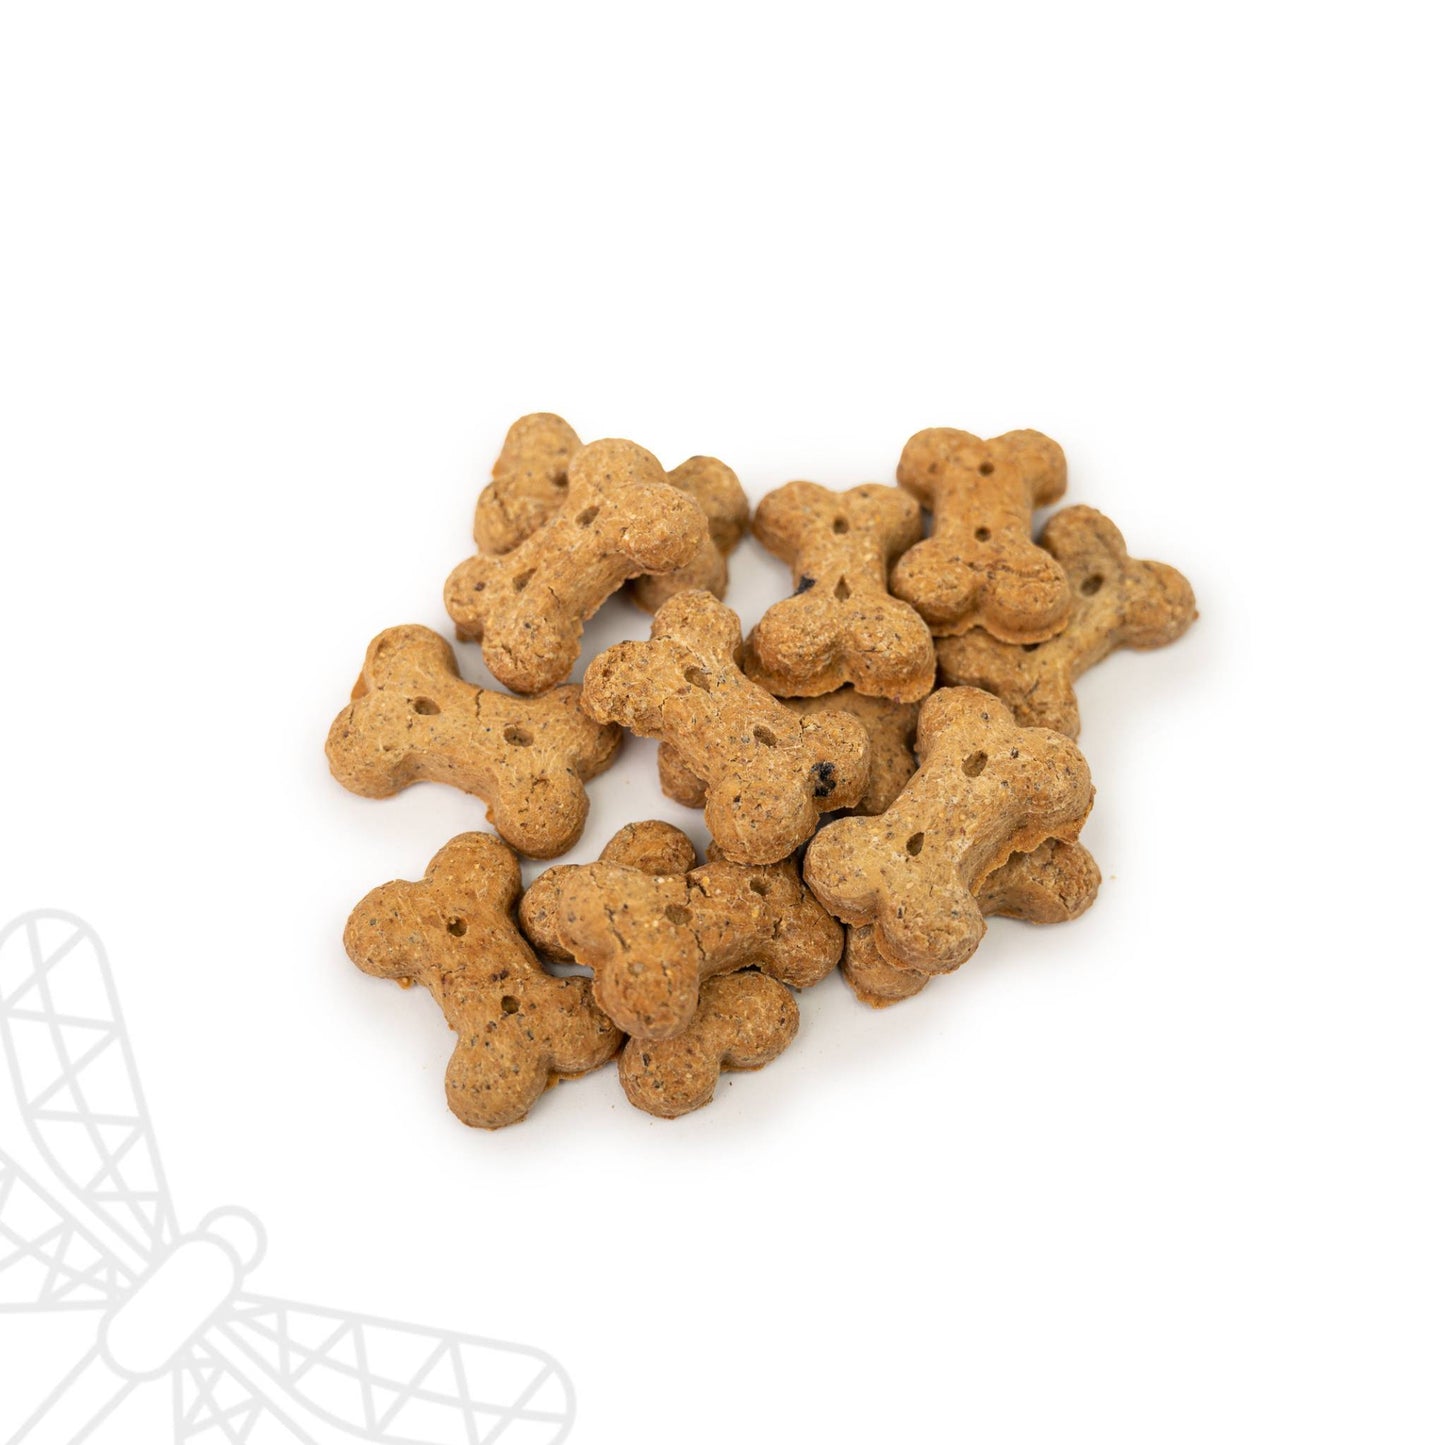 Healthy dog biscuits